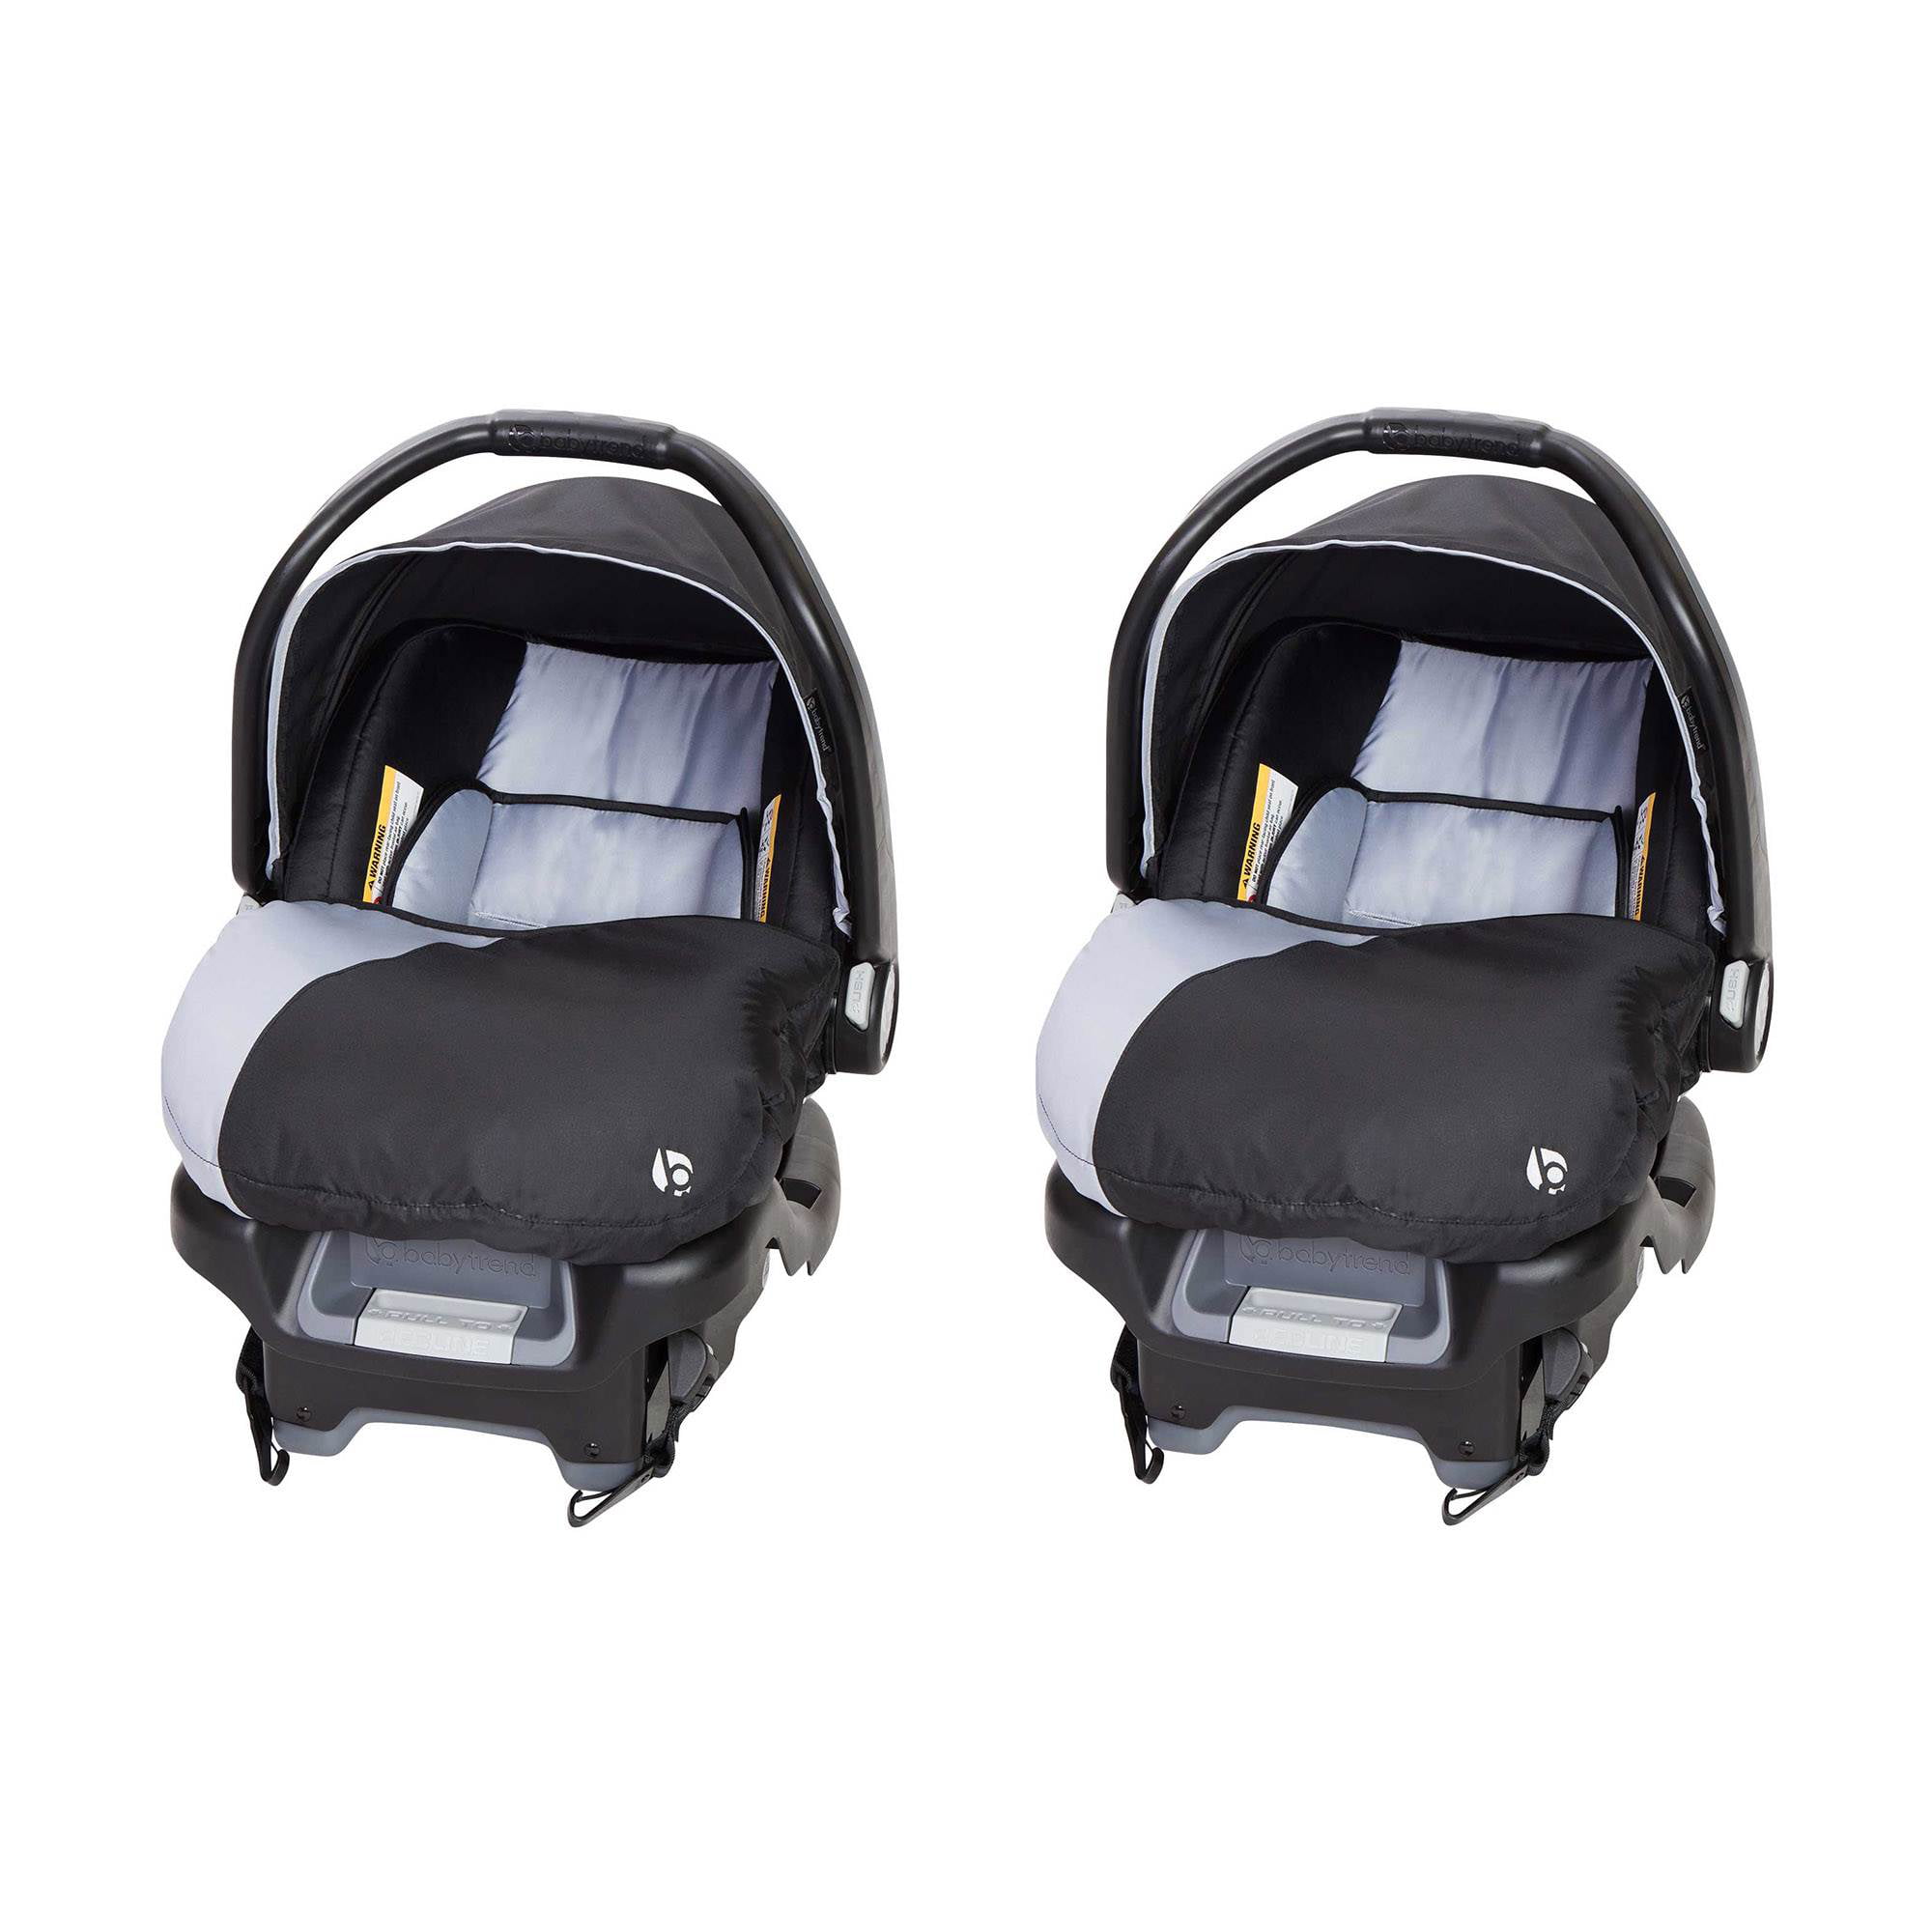 Infant Car Seat Base Baby Safety Key Fit 30 Toddler Cushioned Machine Wash Lilla 